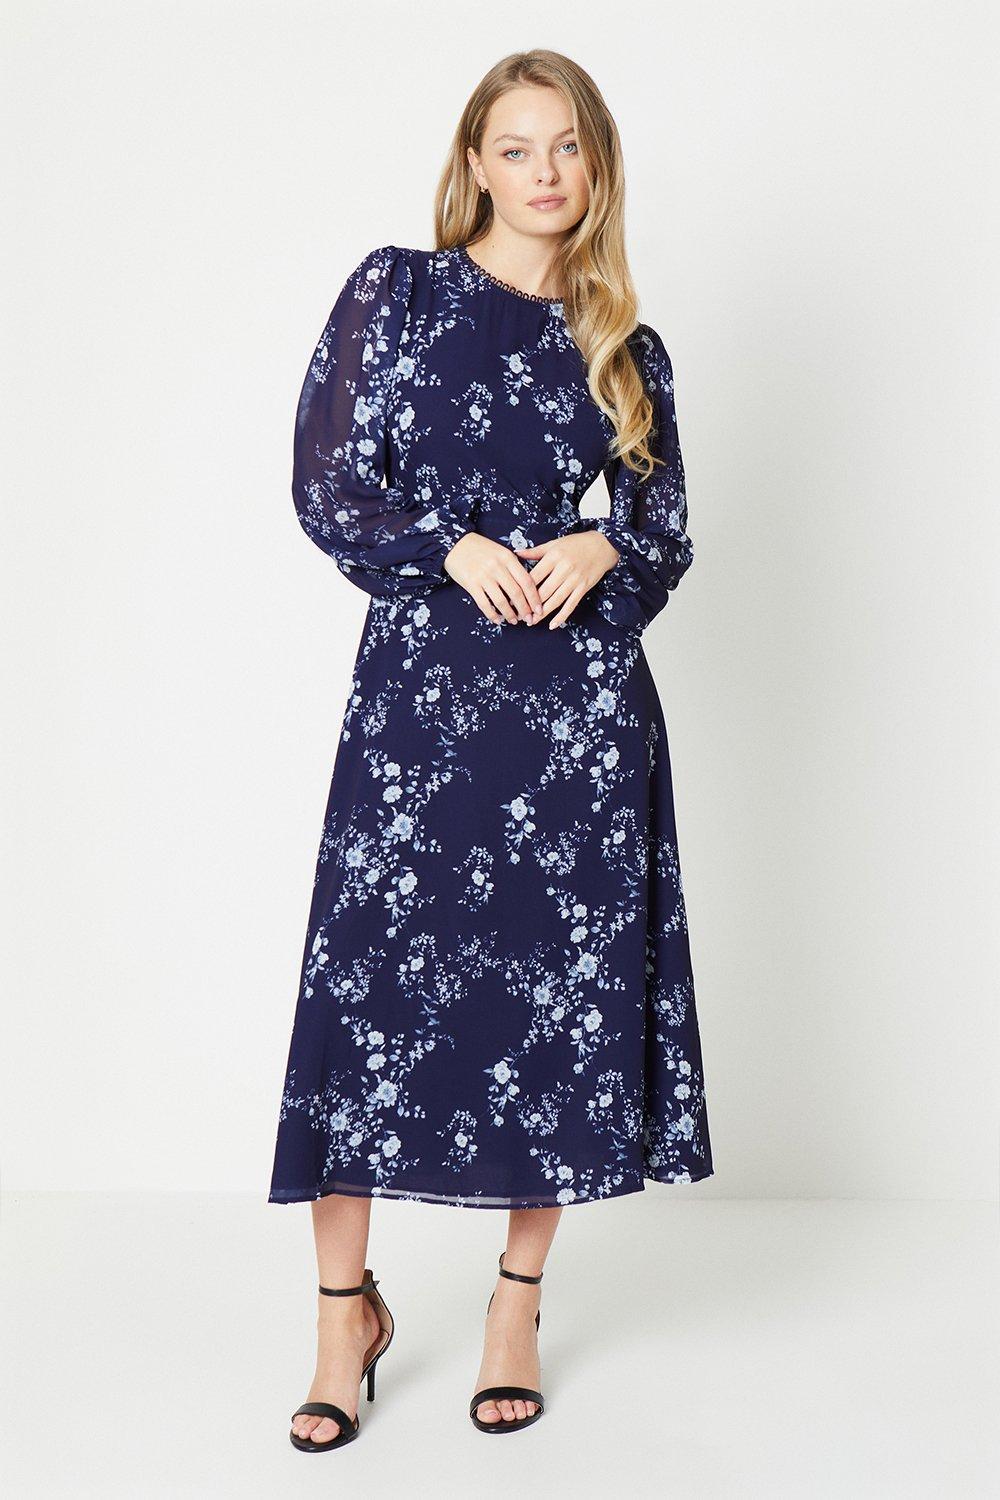 Blue Floral Lace Trim Empire Seam Maxi Dress